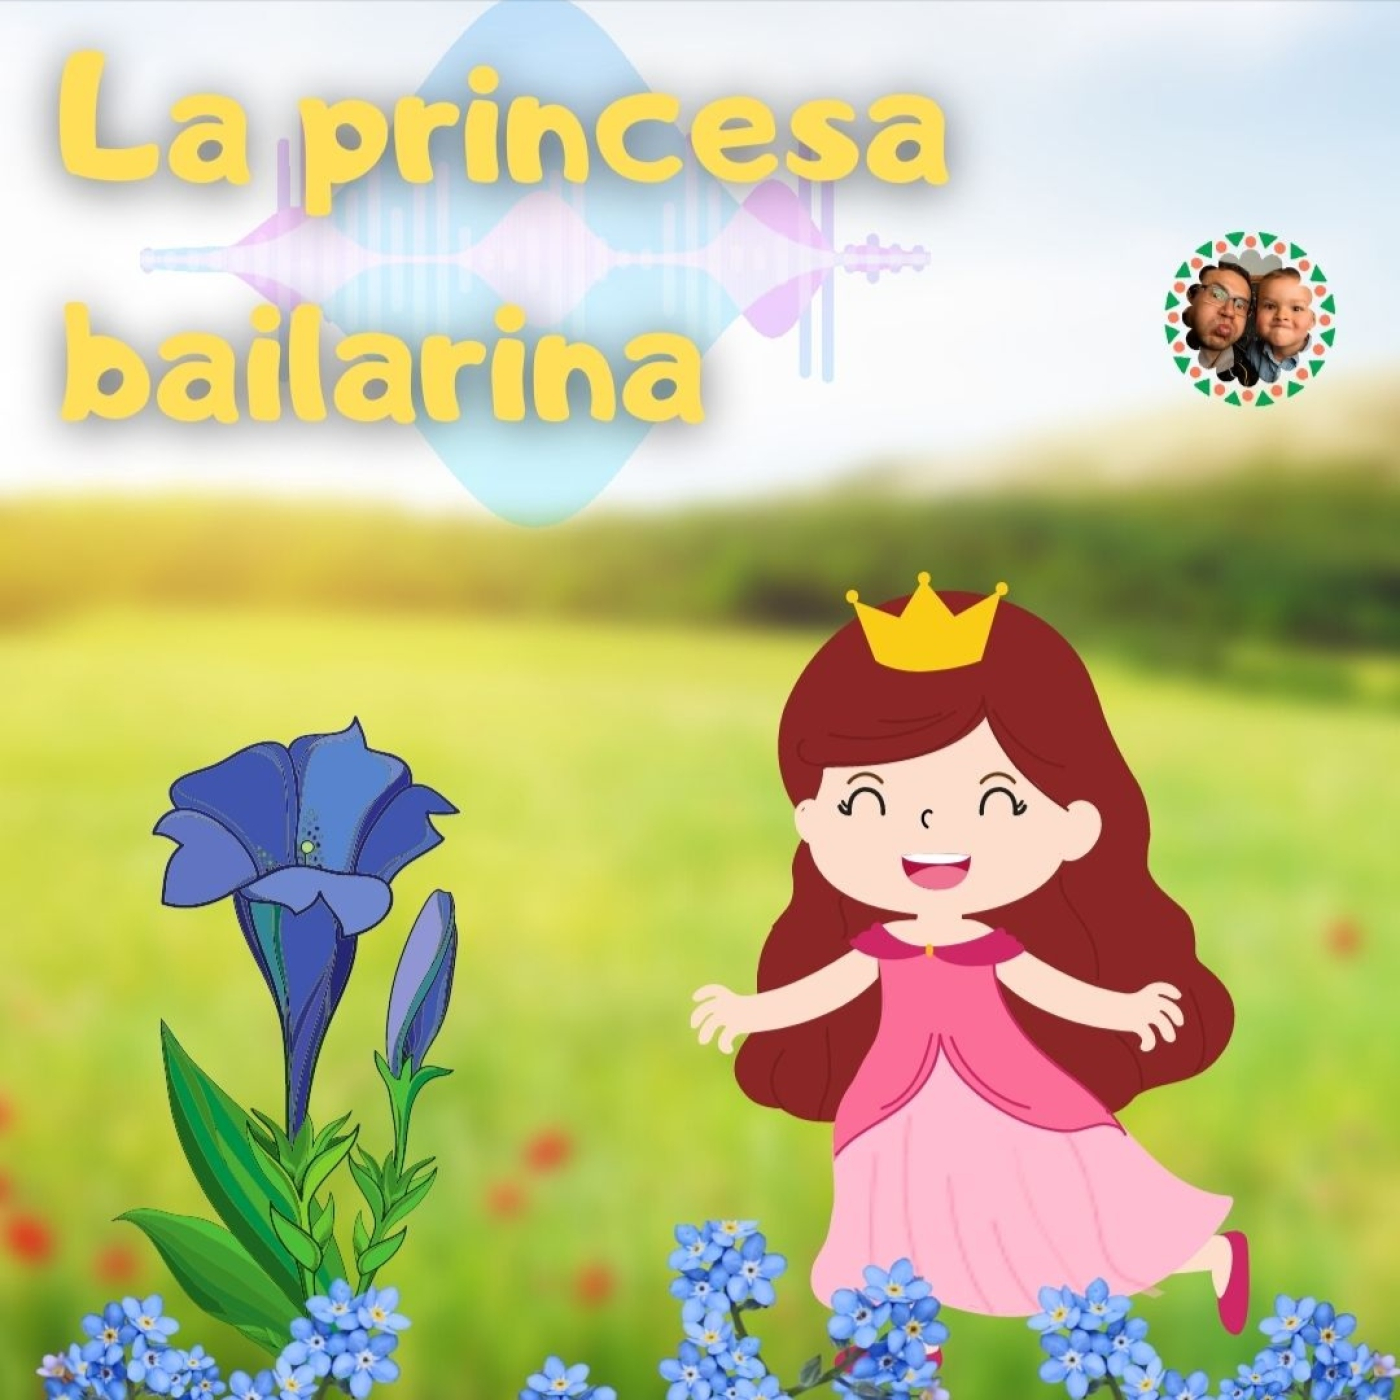 La princesa Bailarina